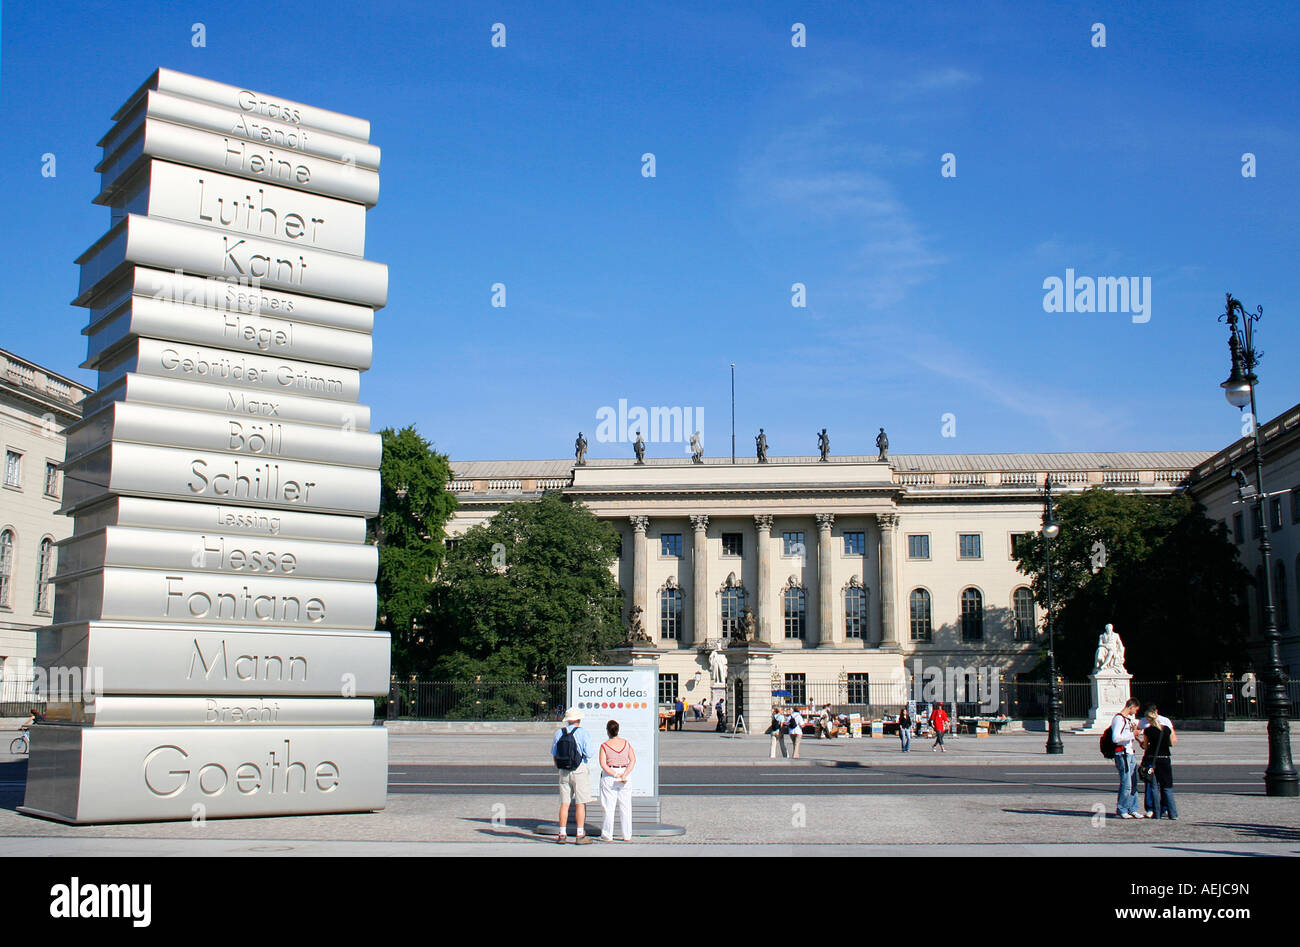 Book sculpture, Humboldt university, Berlin, Germany Stock Photo